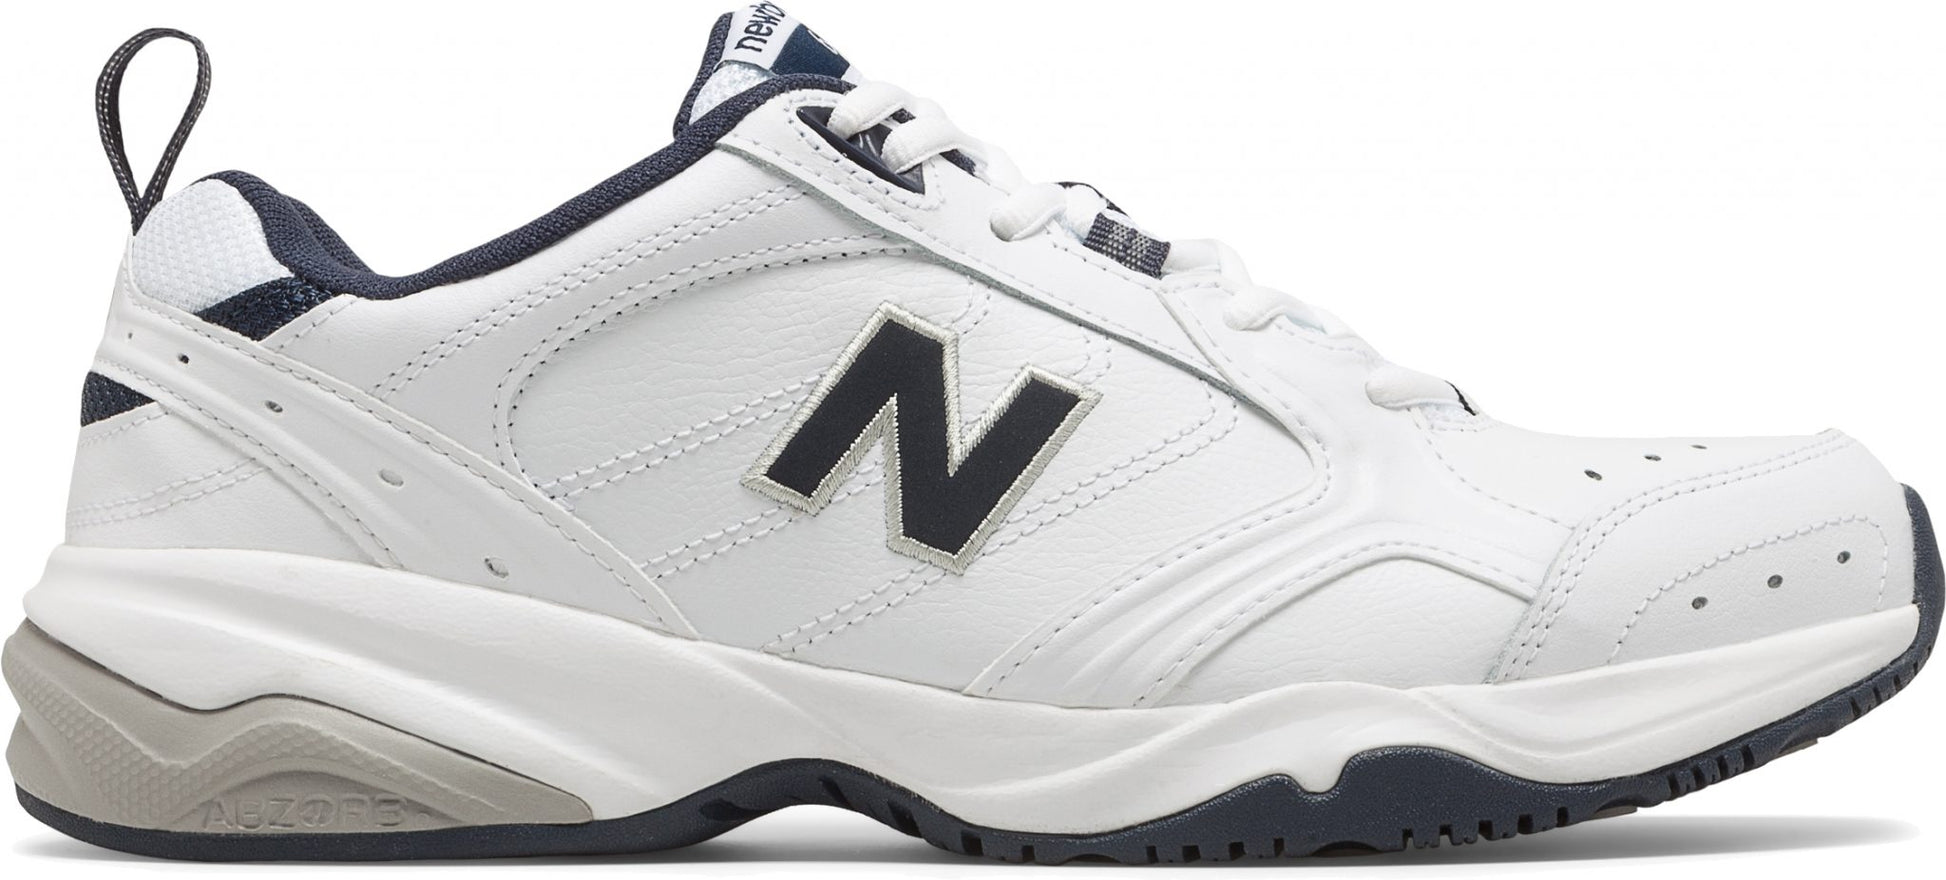 New Balance Men's MX624 White Lace Shoe - Grady’s Feet Essentials - New Balance